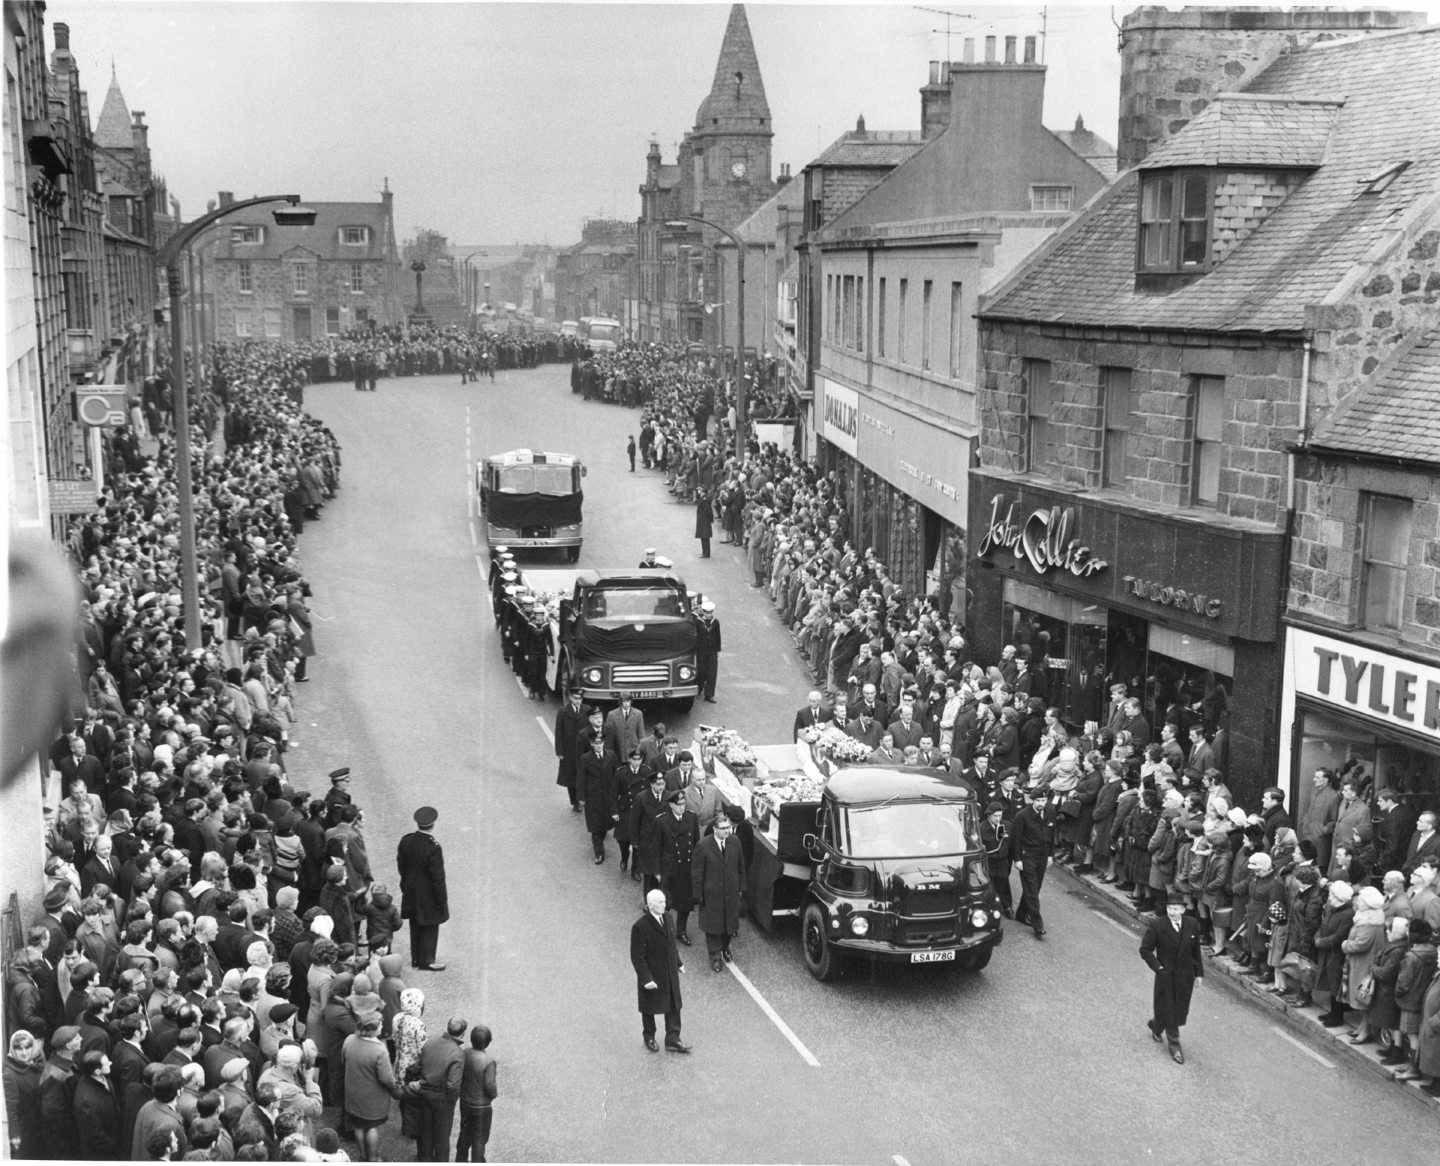 Looking down on the vast crowds in Broad Street, Fraserburgh, during the brave men's funeral cortege in 1970. 